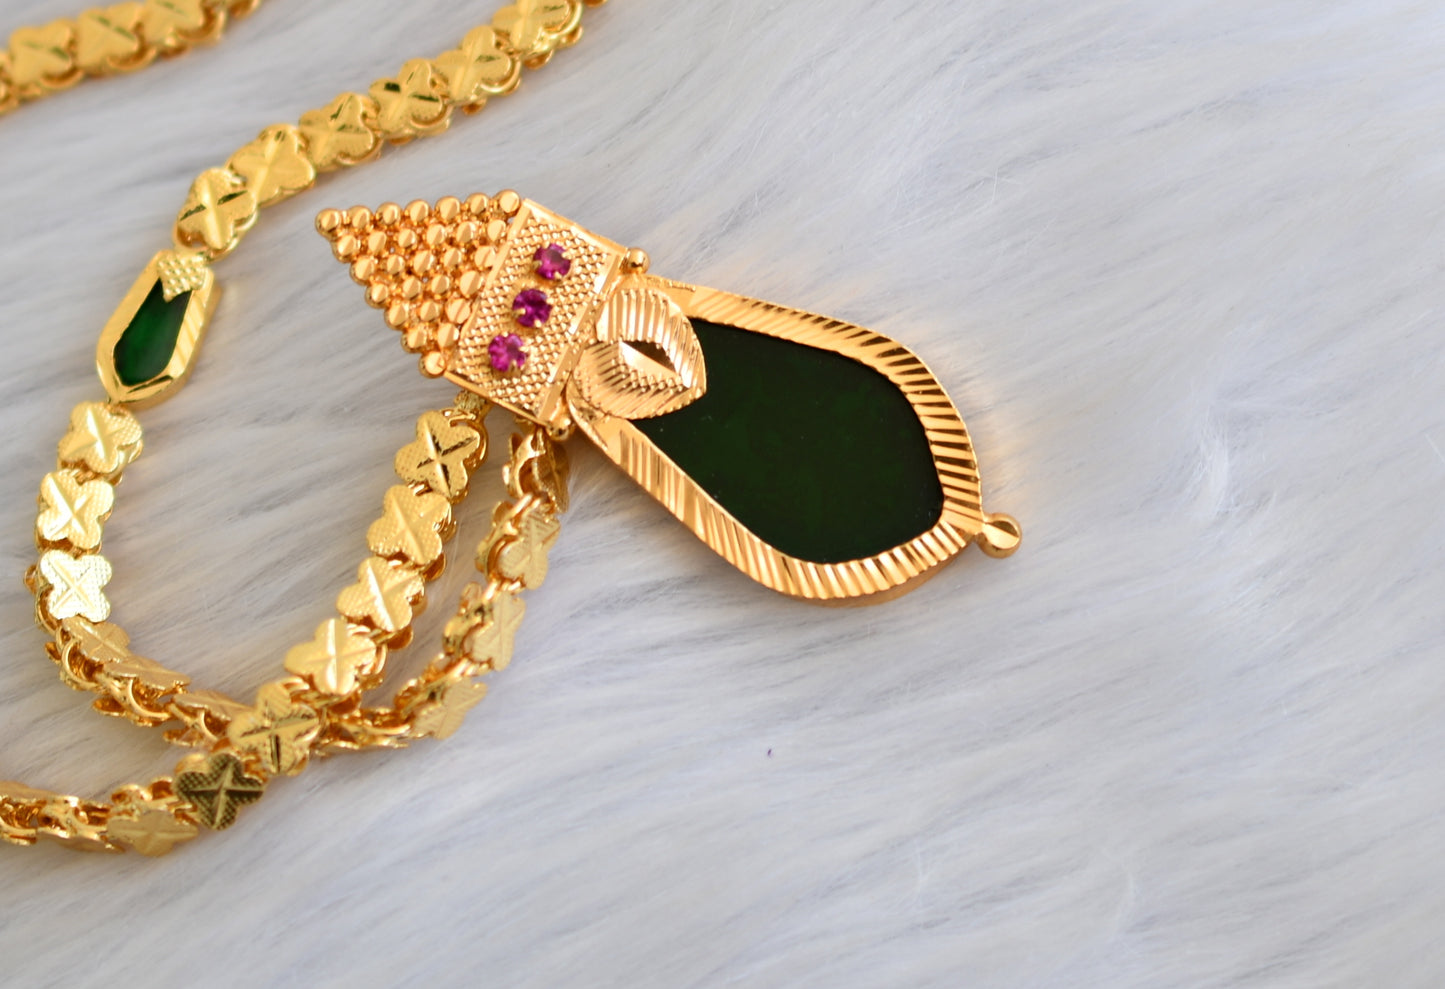 Gold tone pink-green nagapadam Kerala style pendant with chain dj-40323